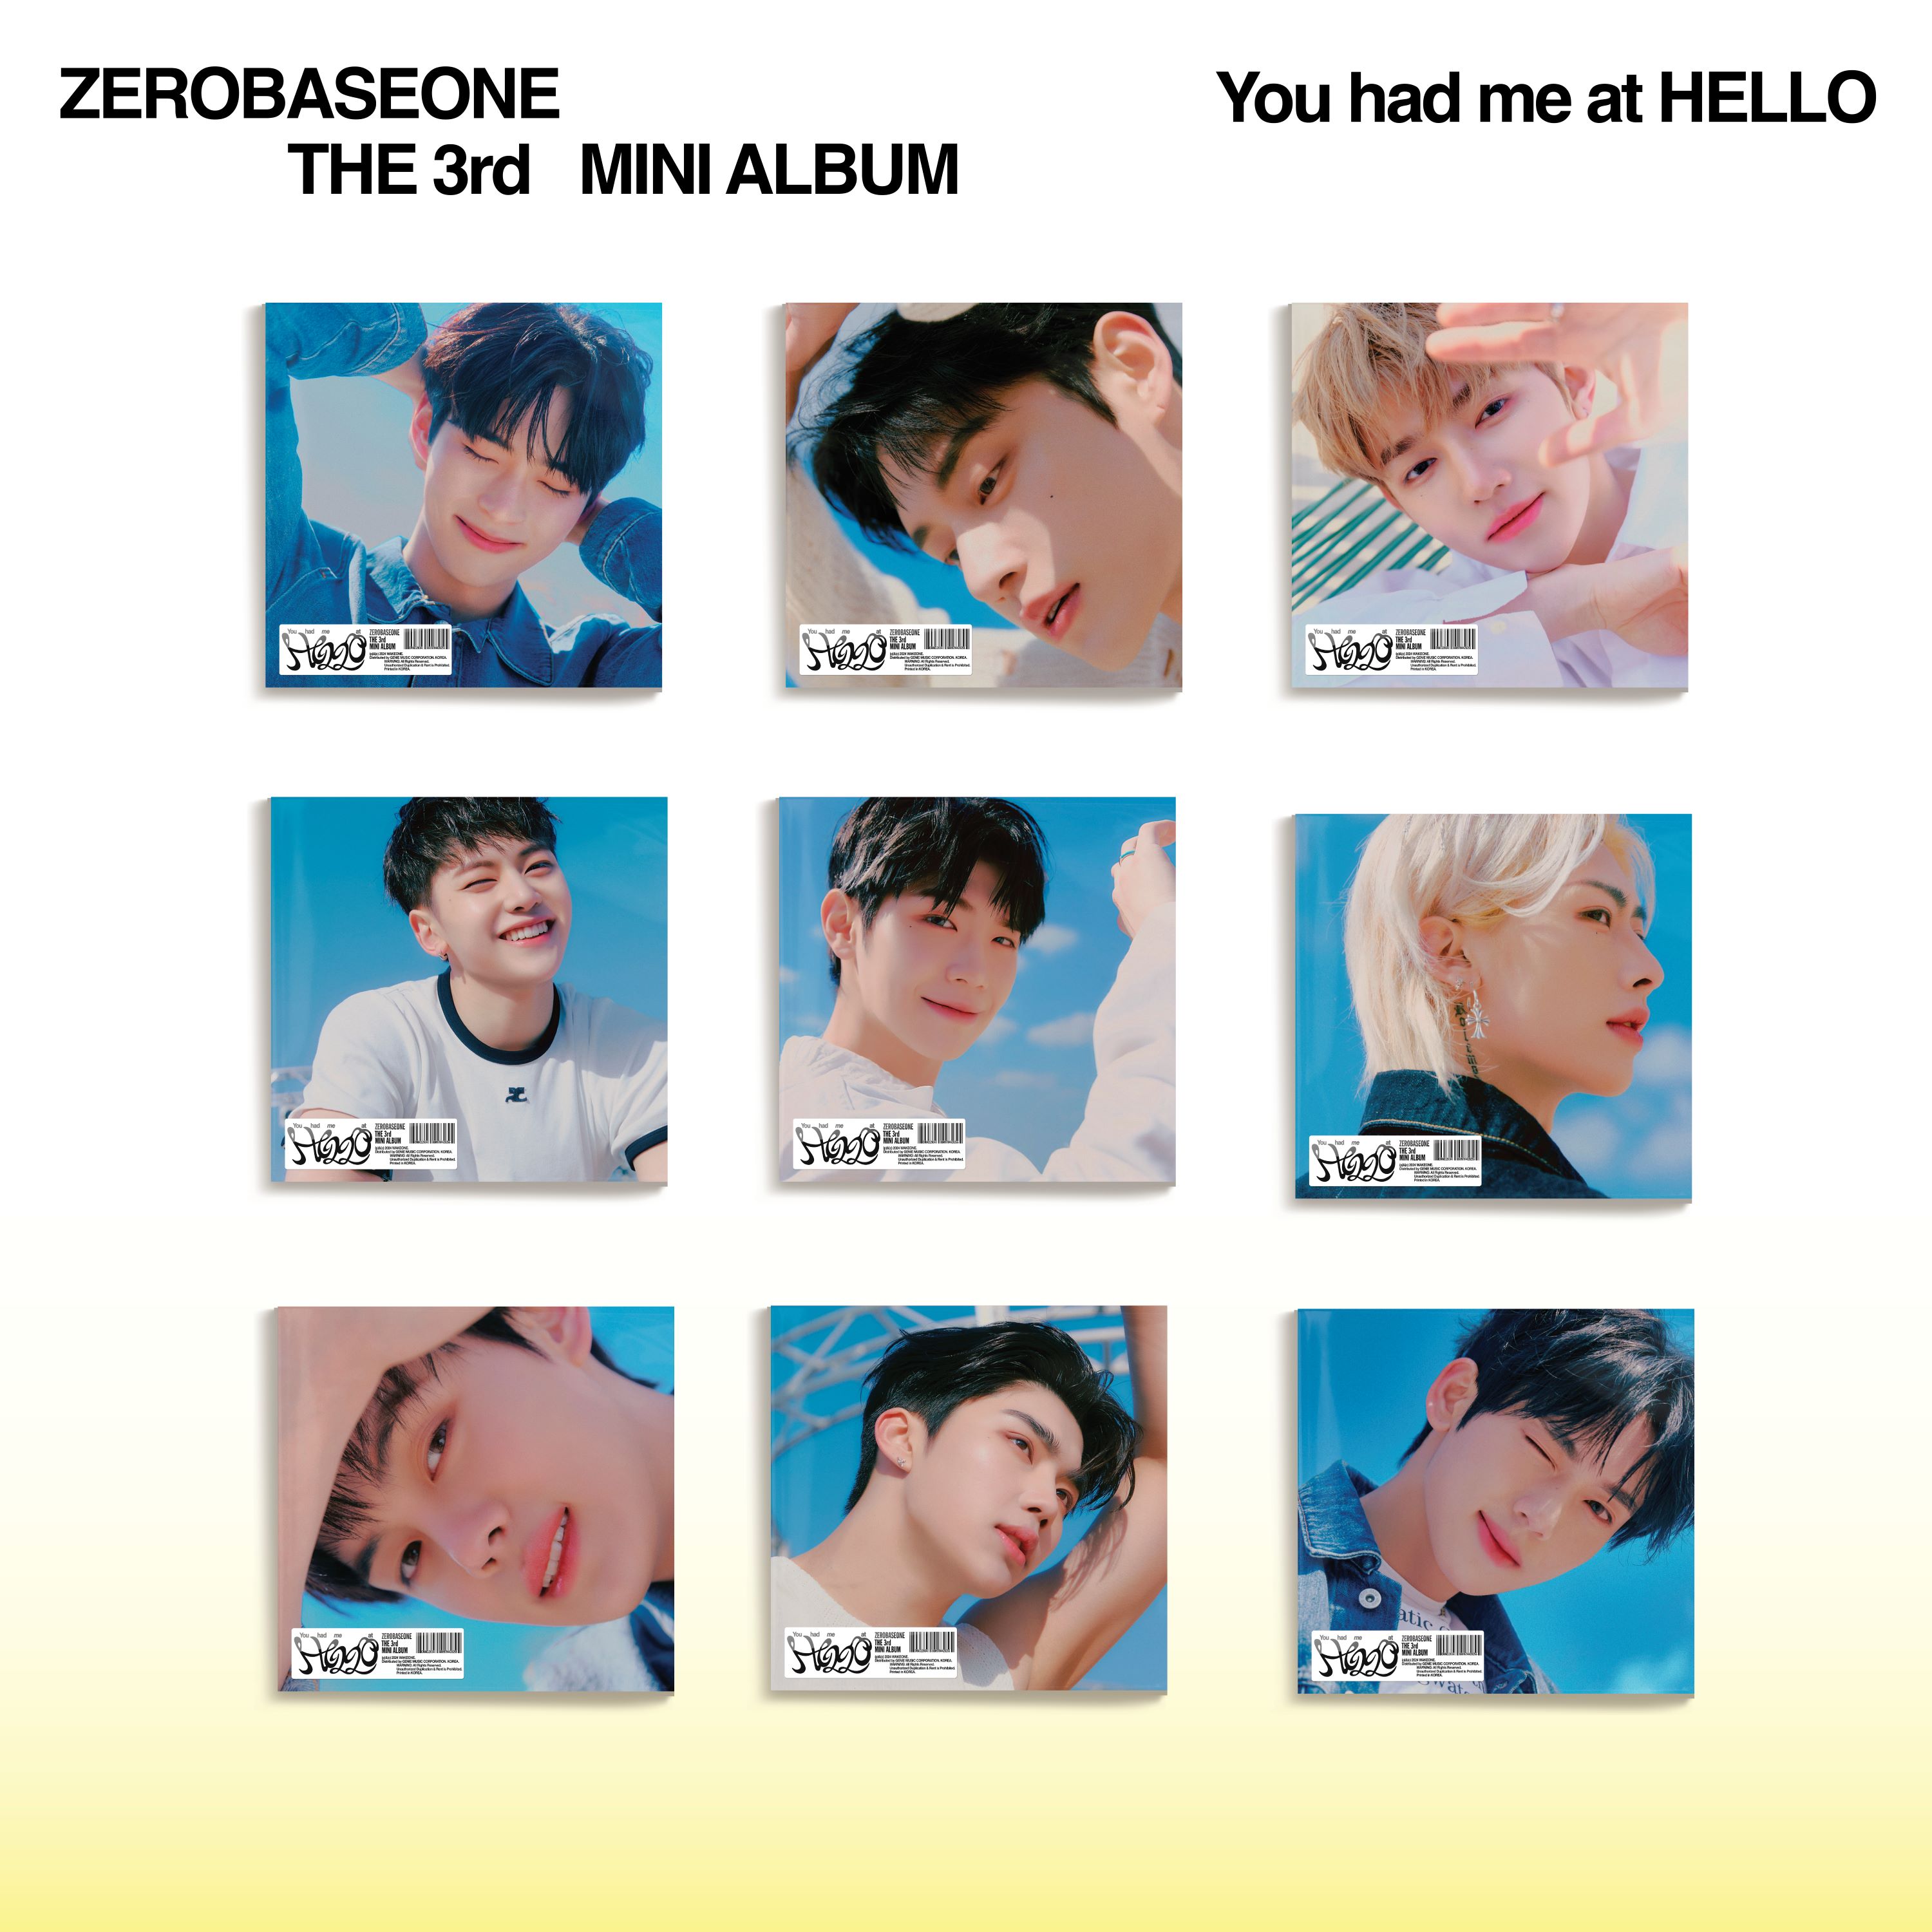 ZEROBASEONE The 3rd Mini Album – You had me at HELLO (Digipack Ver.) (Random) + Makestar Benefit